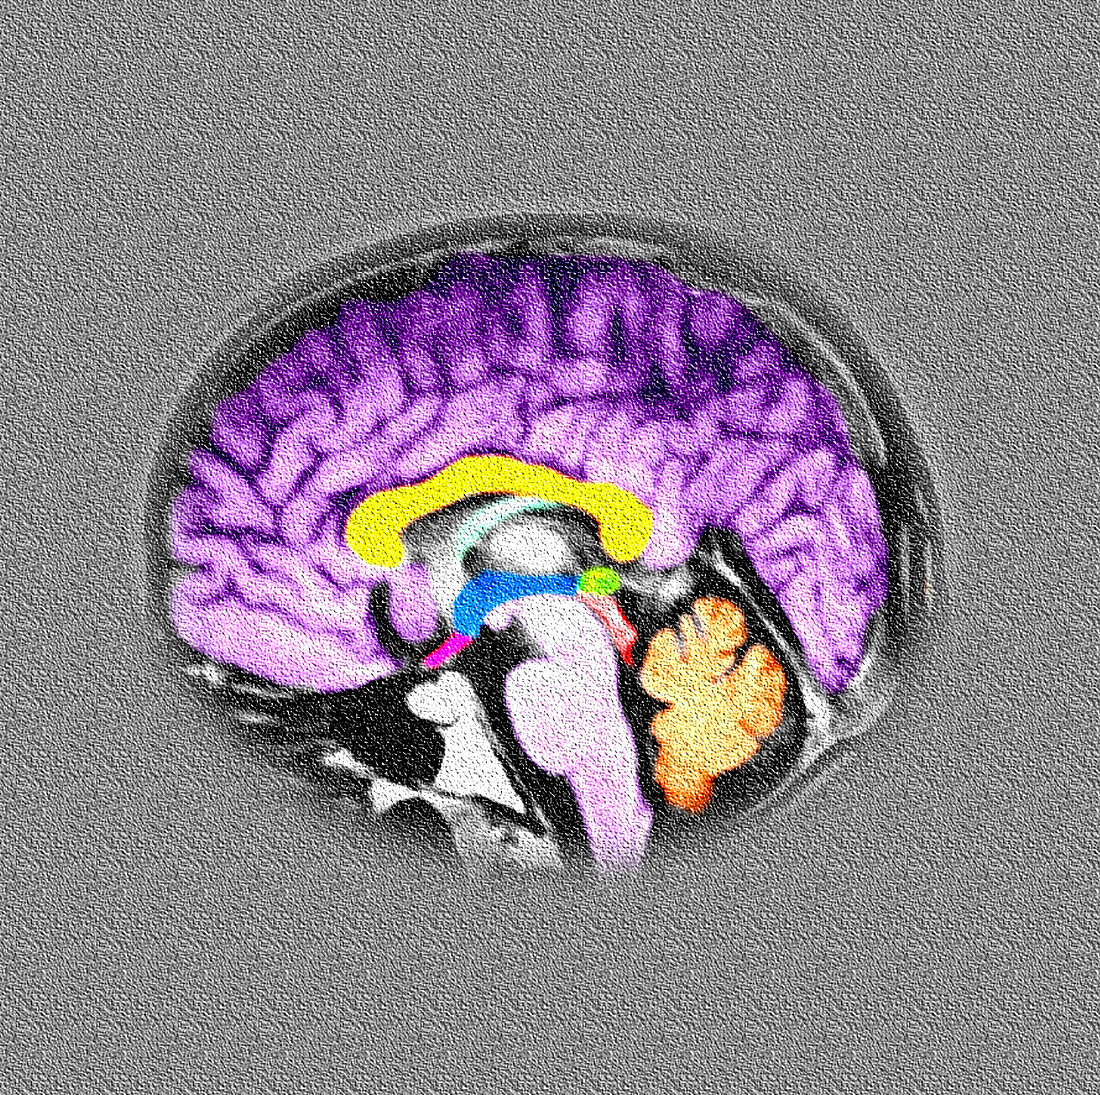 Sagital View of the Normal Human Brain